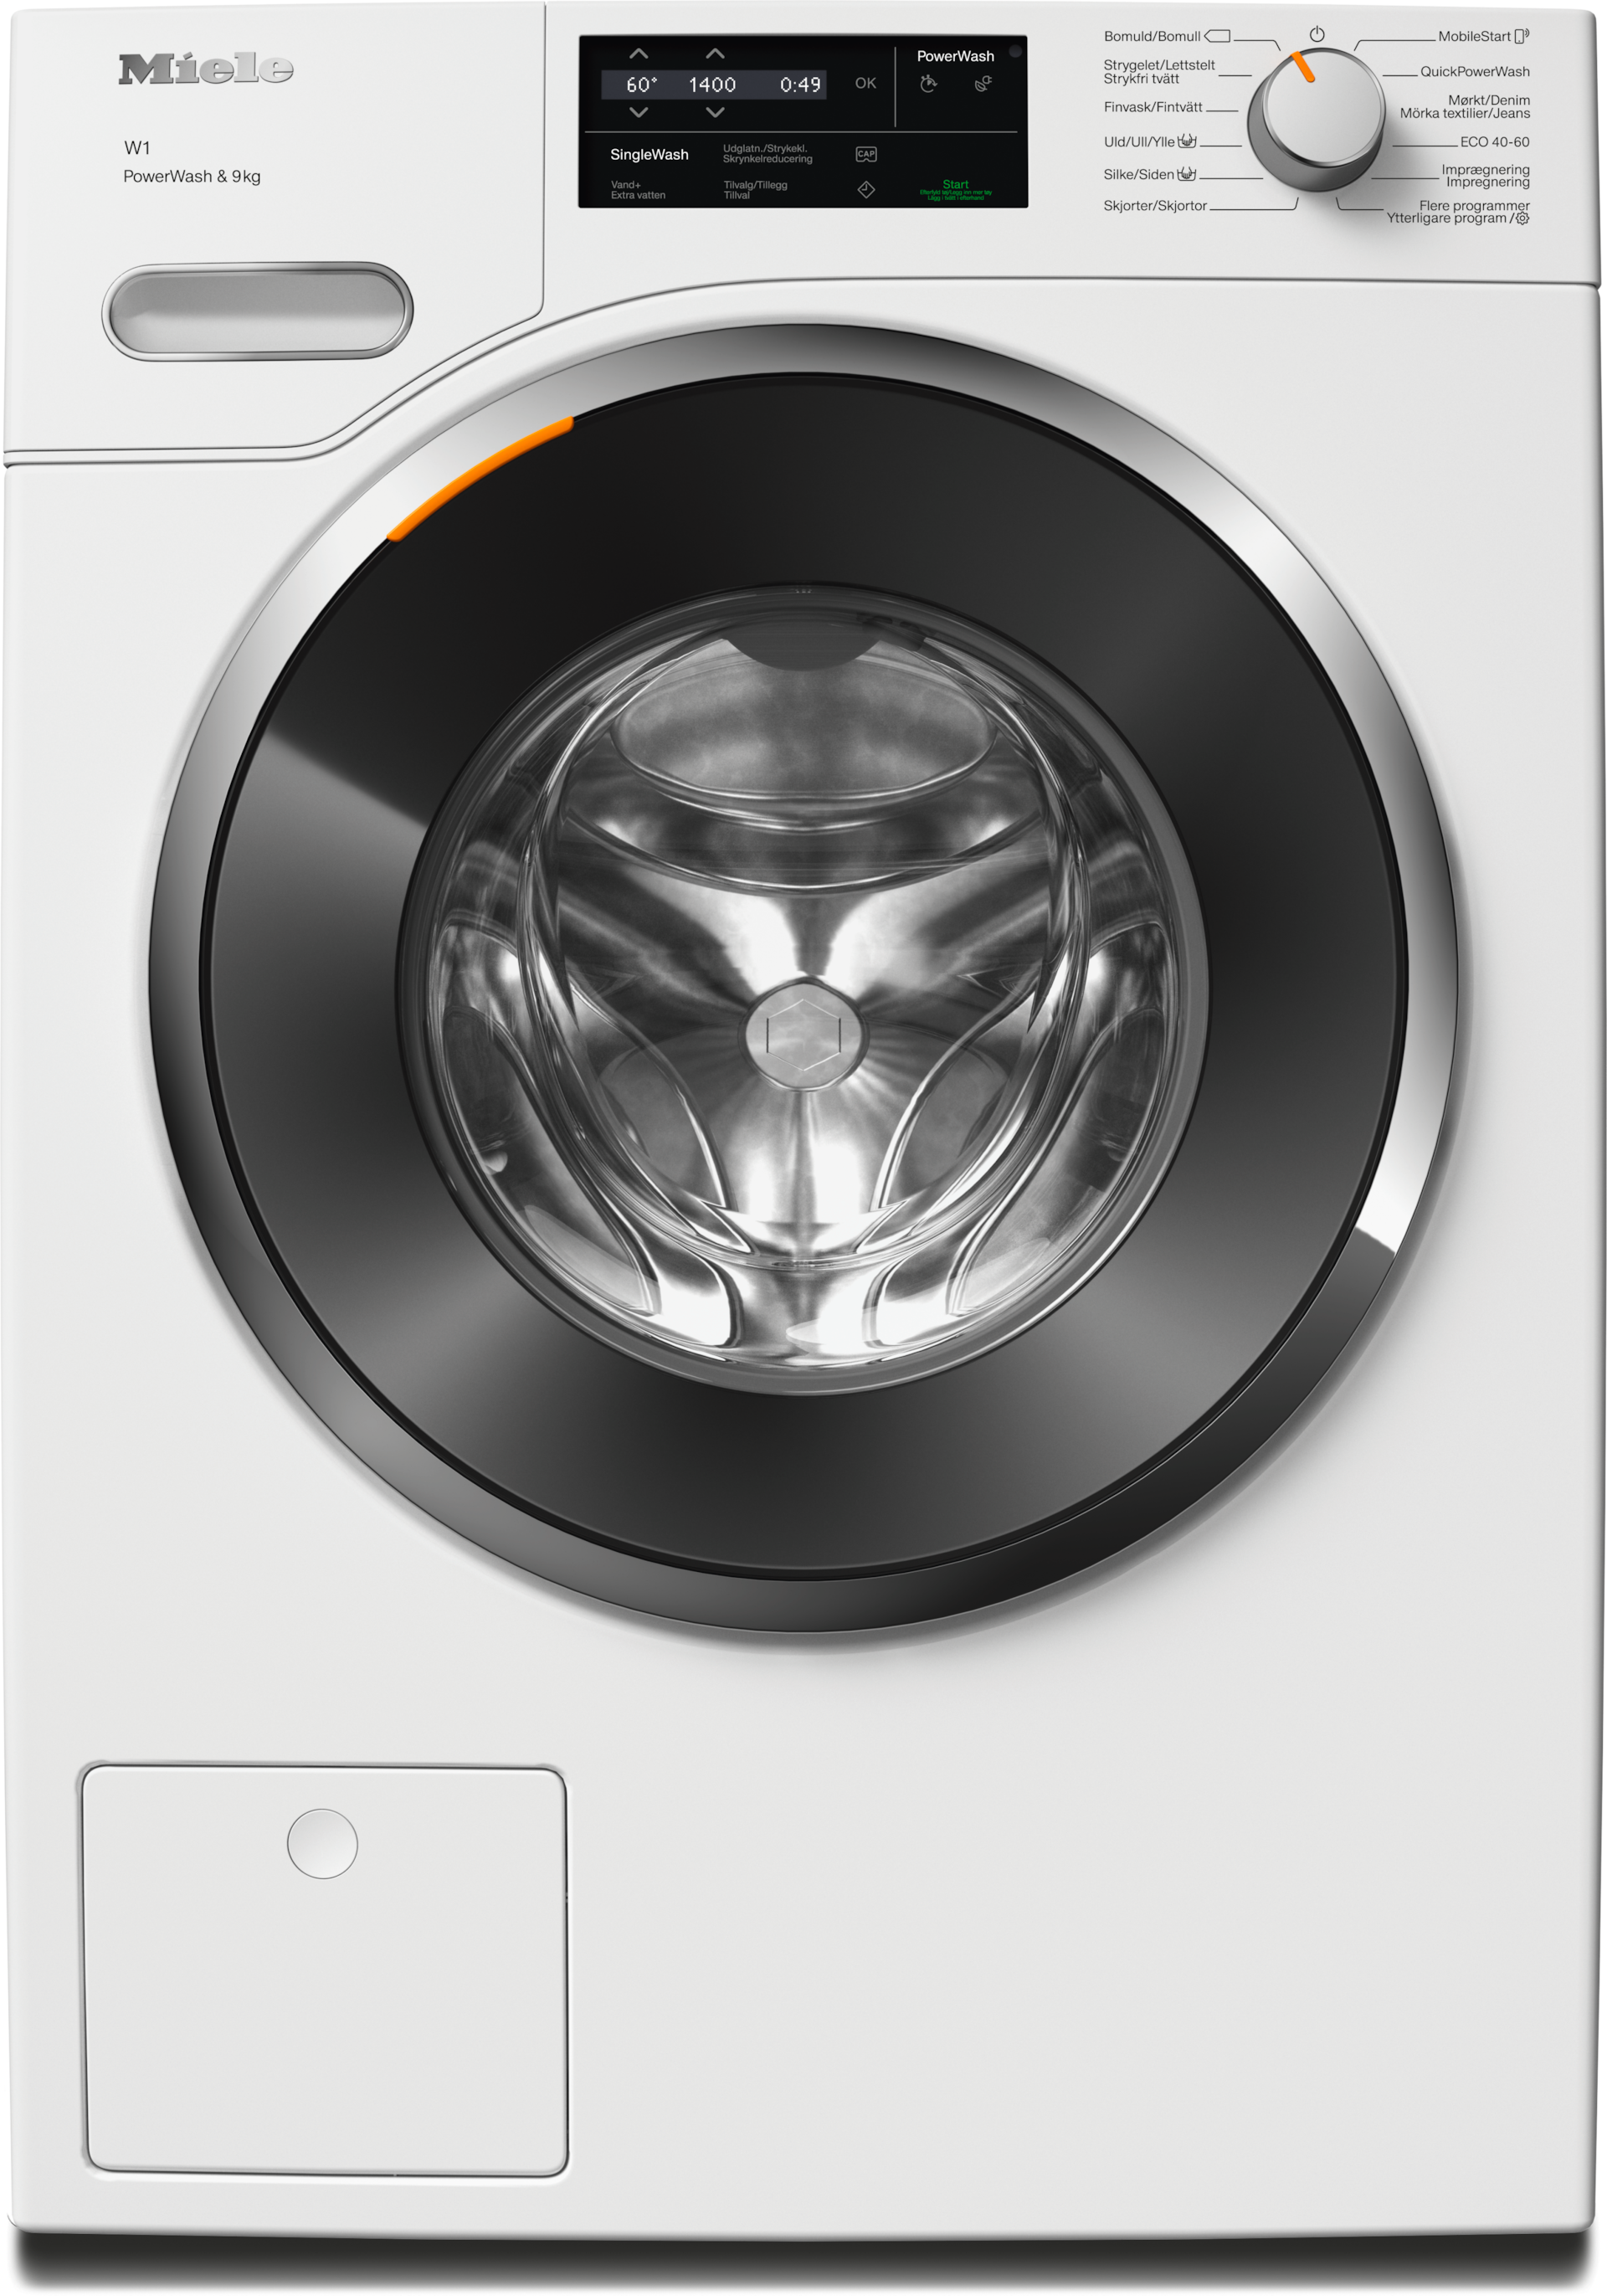 Tvättmaskiner - WWG360 WCS PWash&9kg Lotusvit - 1